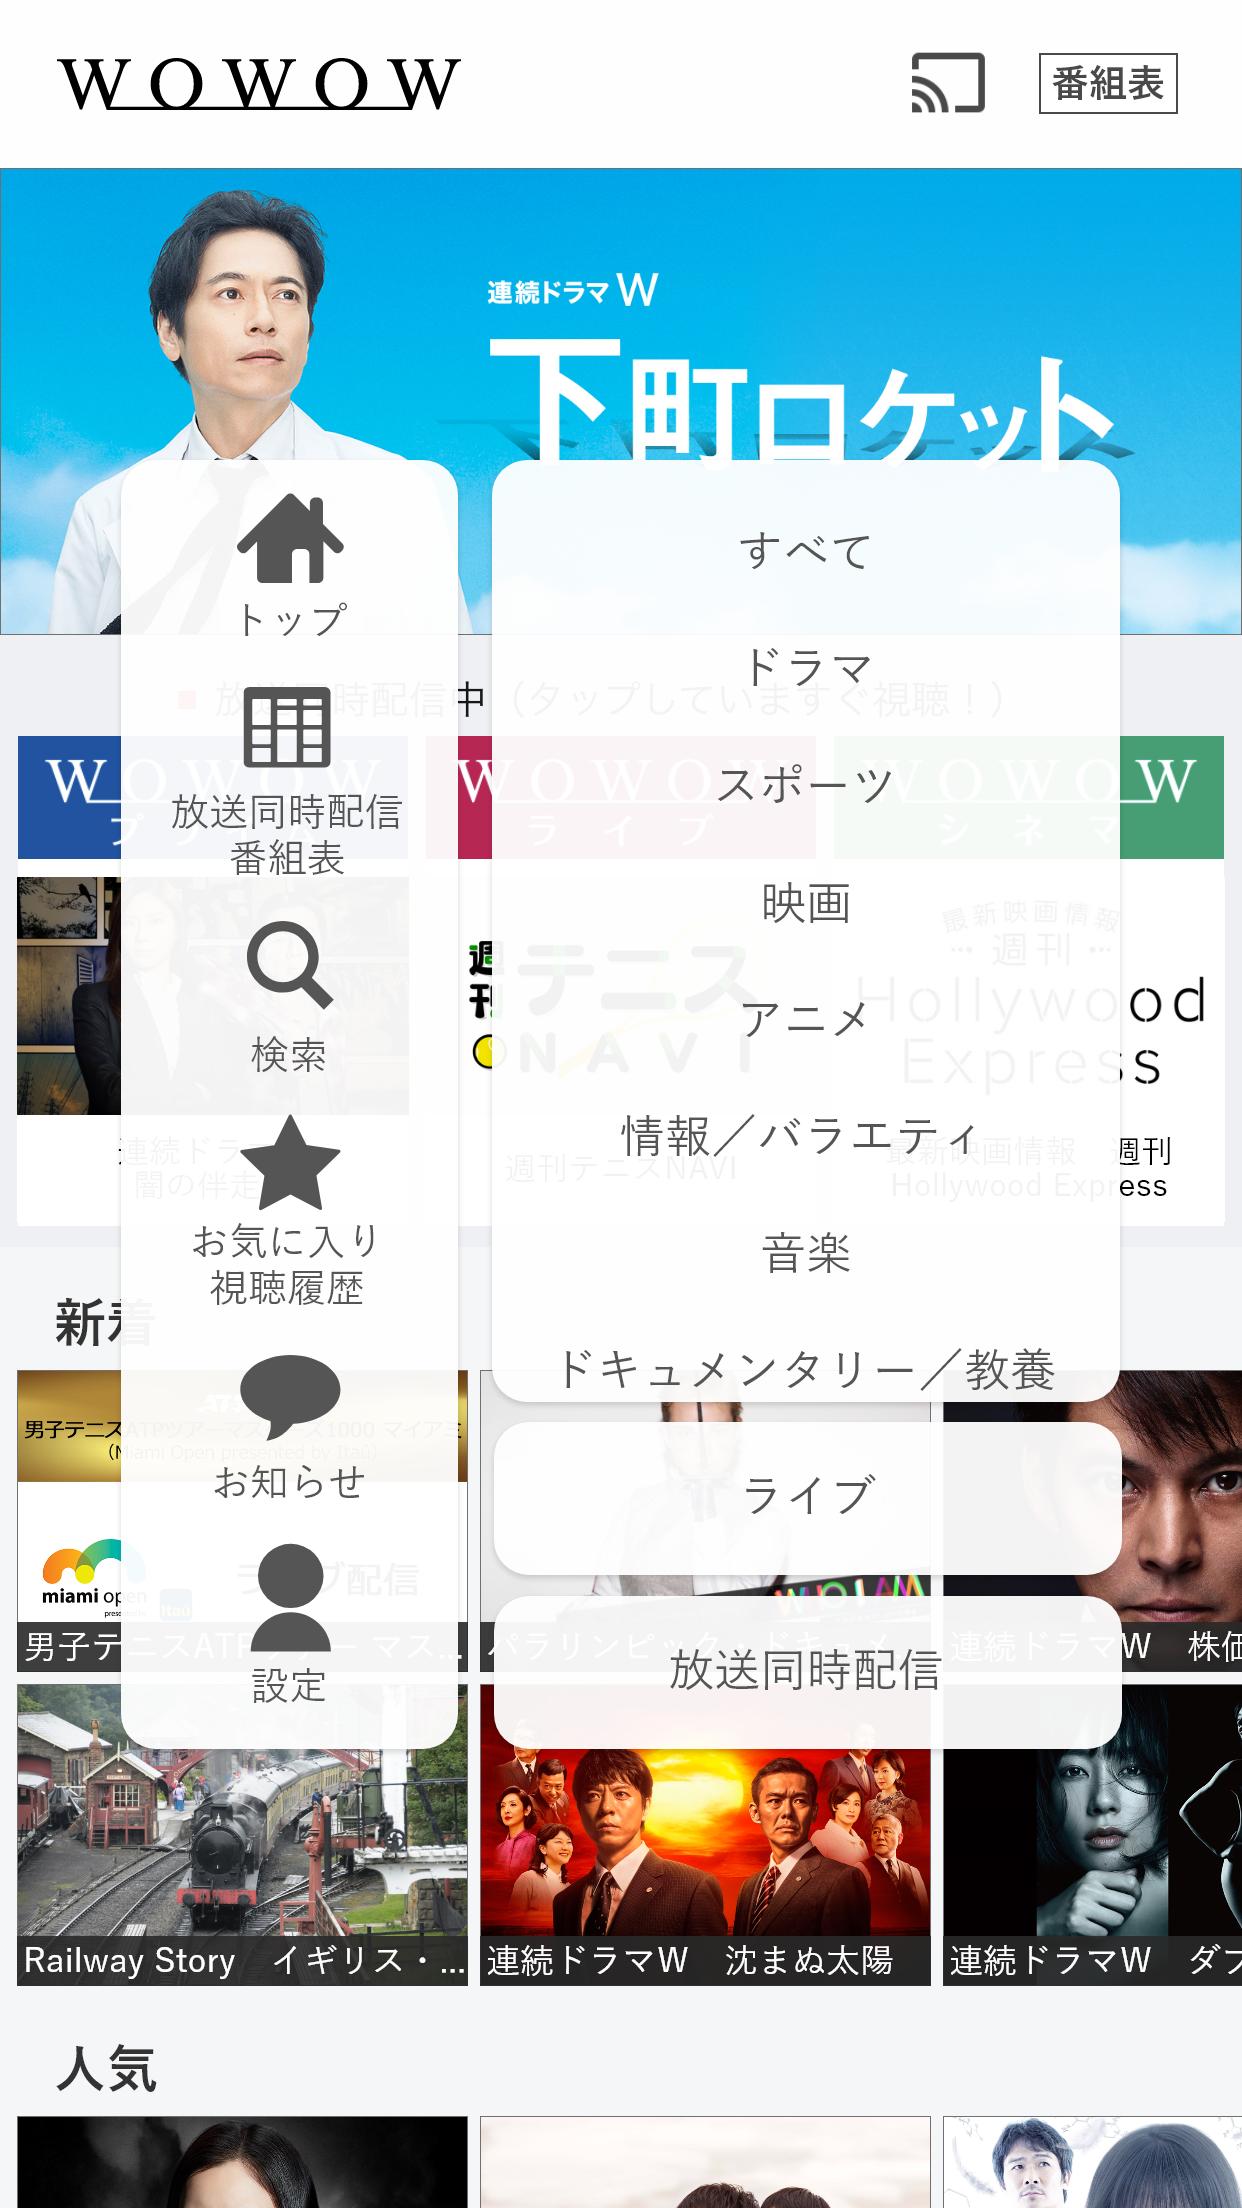 WOWOWメンバーズオンデマンド 5.5.5 Screenshot 2